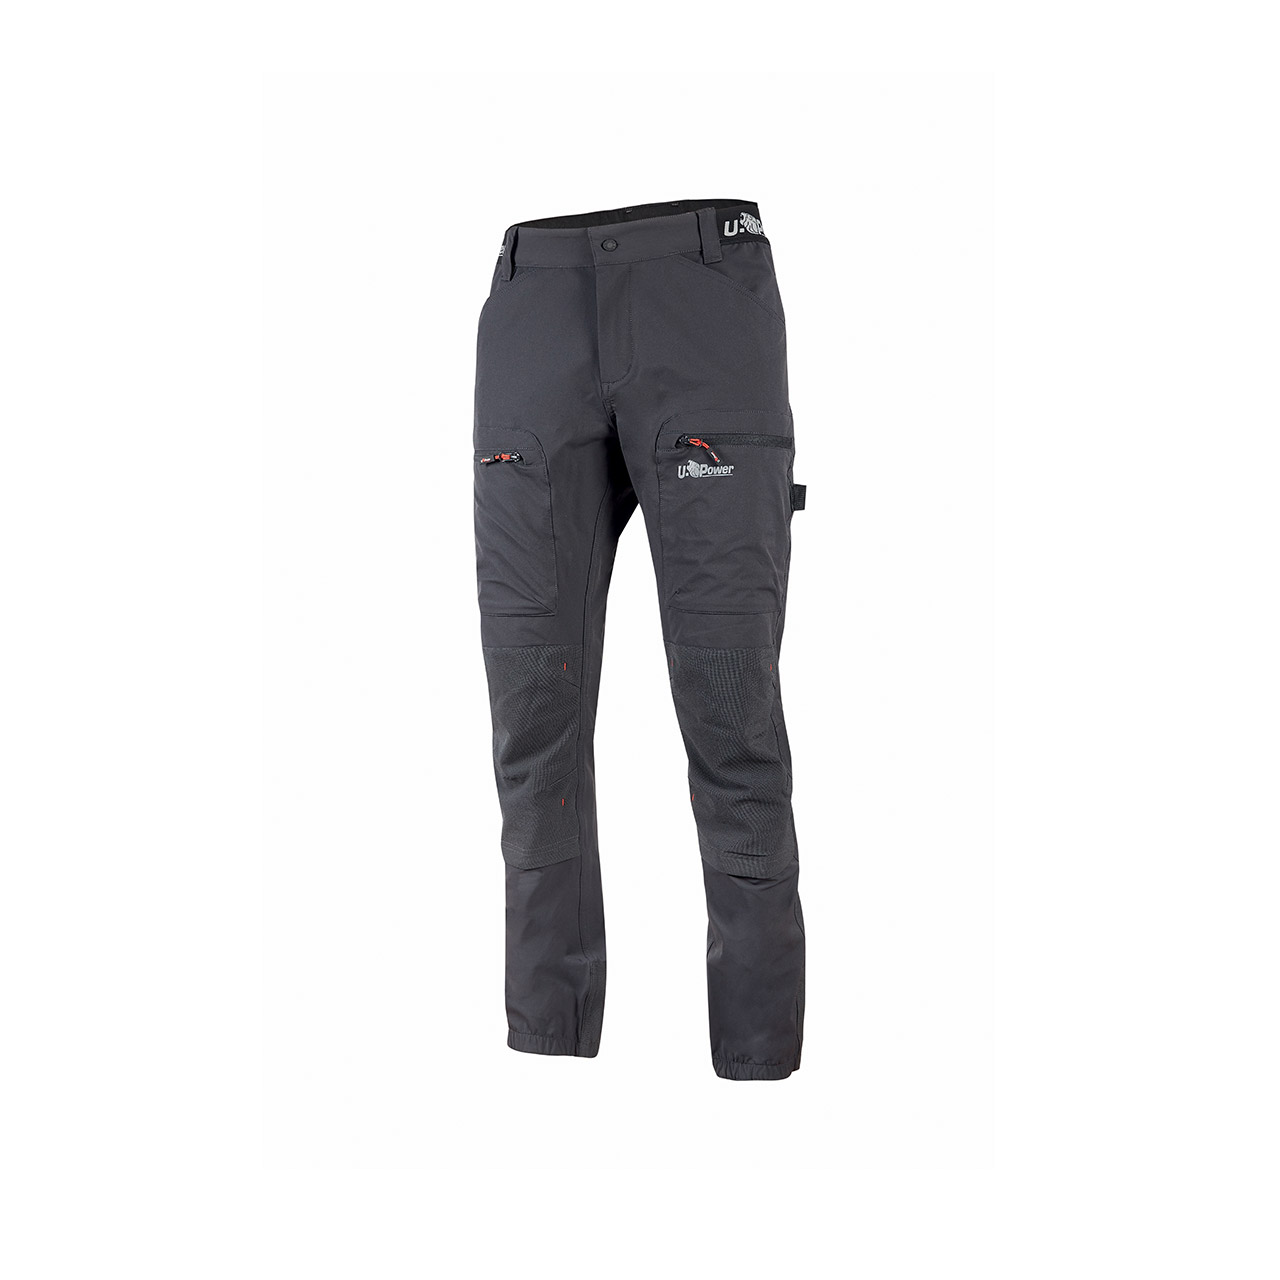 pantalone da lavoro upower modello horizon colore asphalt grey